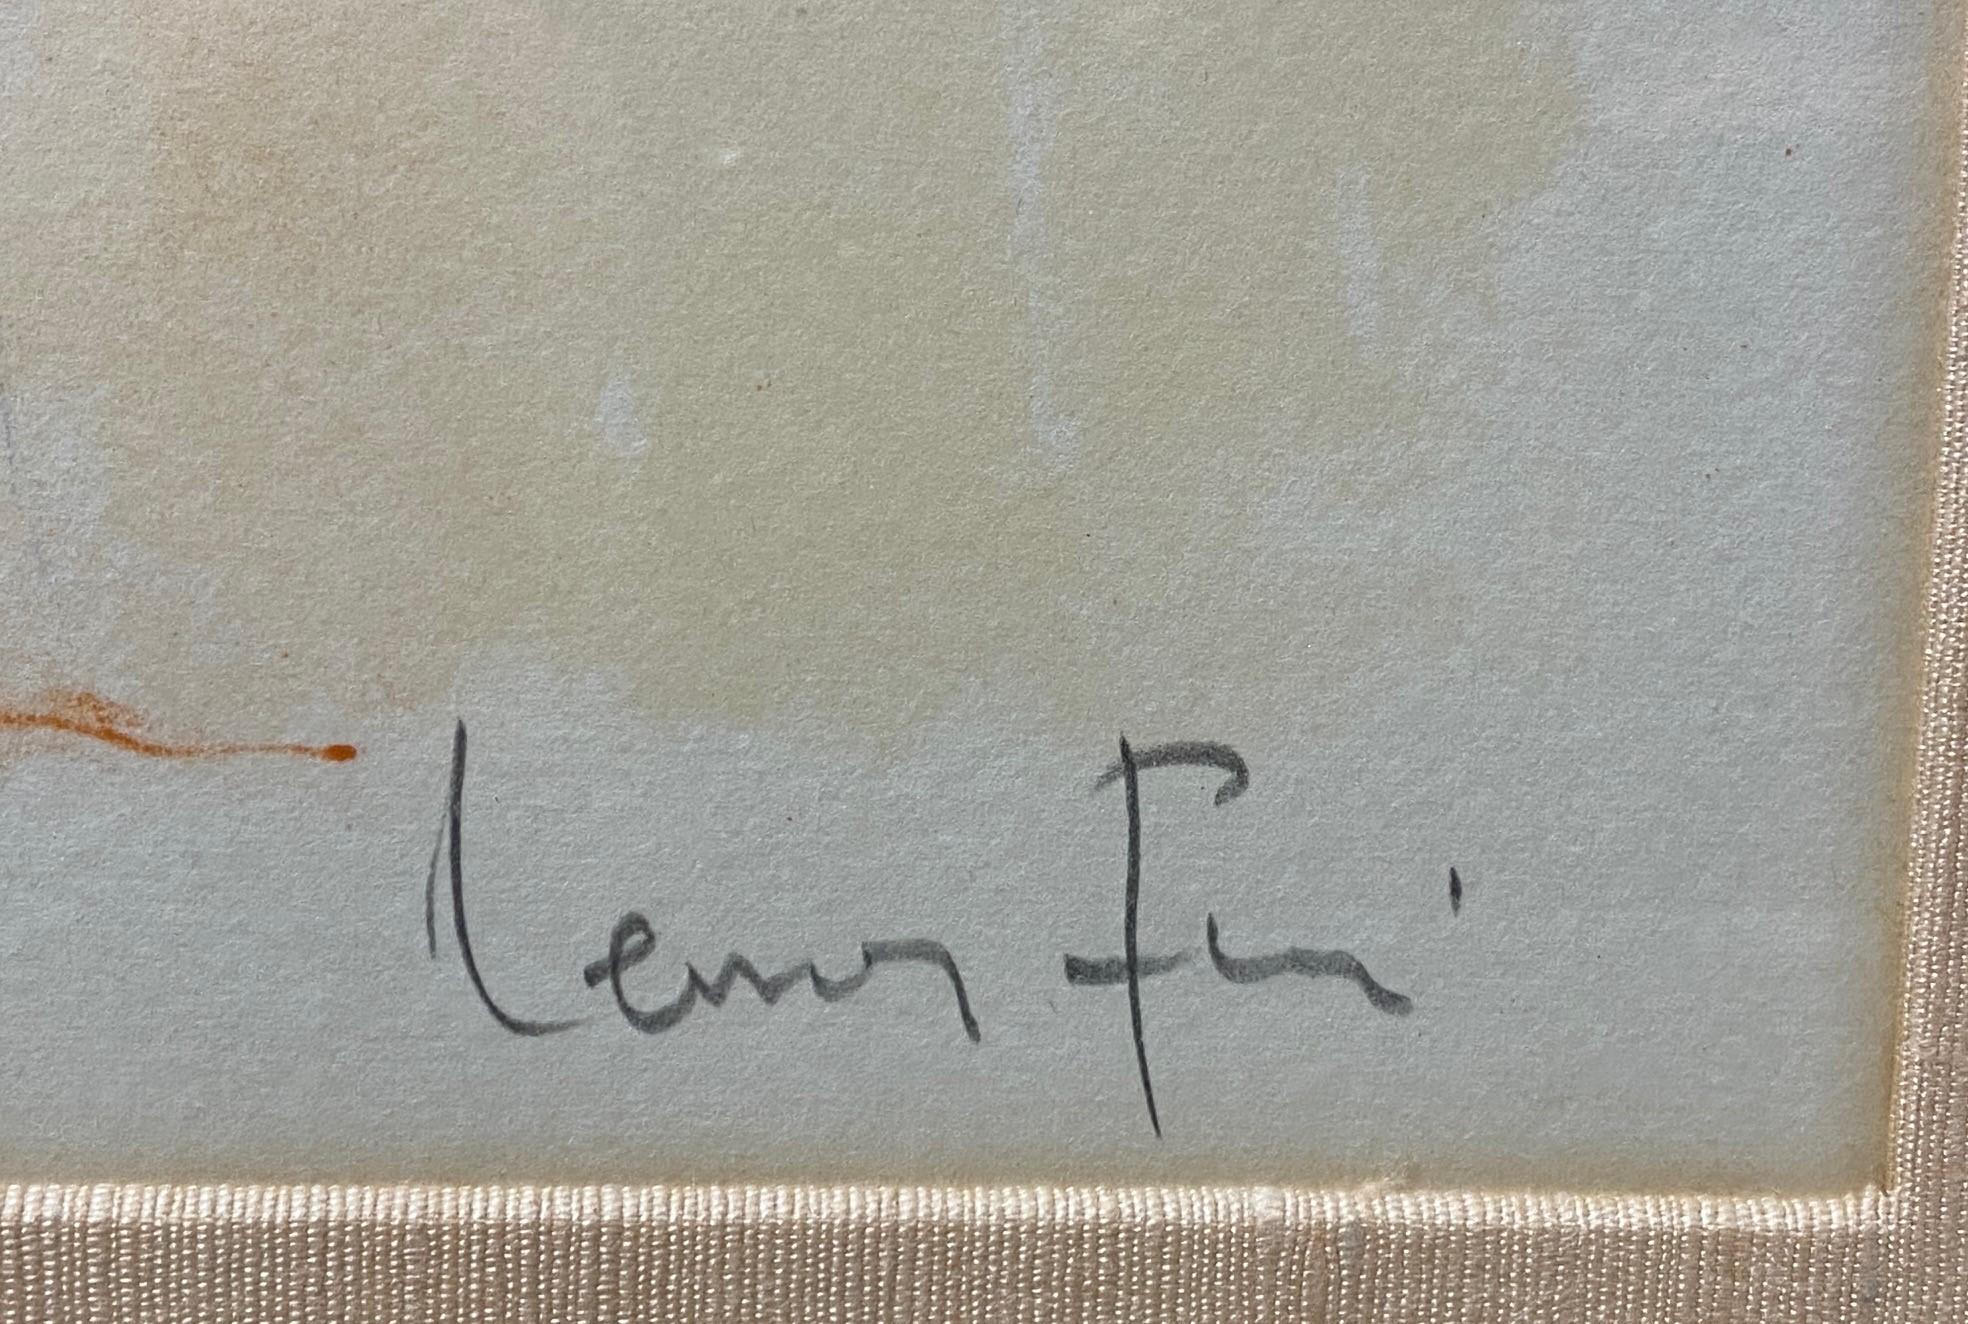 Paper Leonor Fini Signed Framed Lithograh Print Femme Avec Cheveux Rouge, circa 1970s For Sale